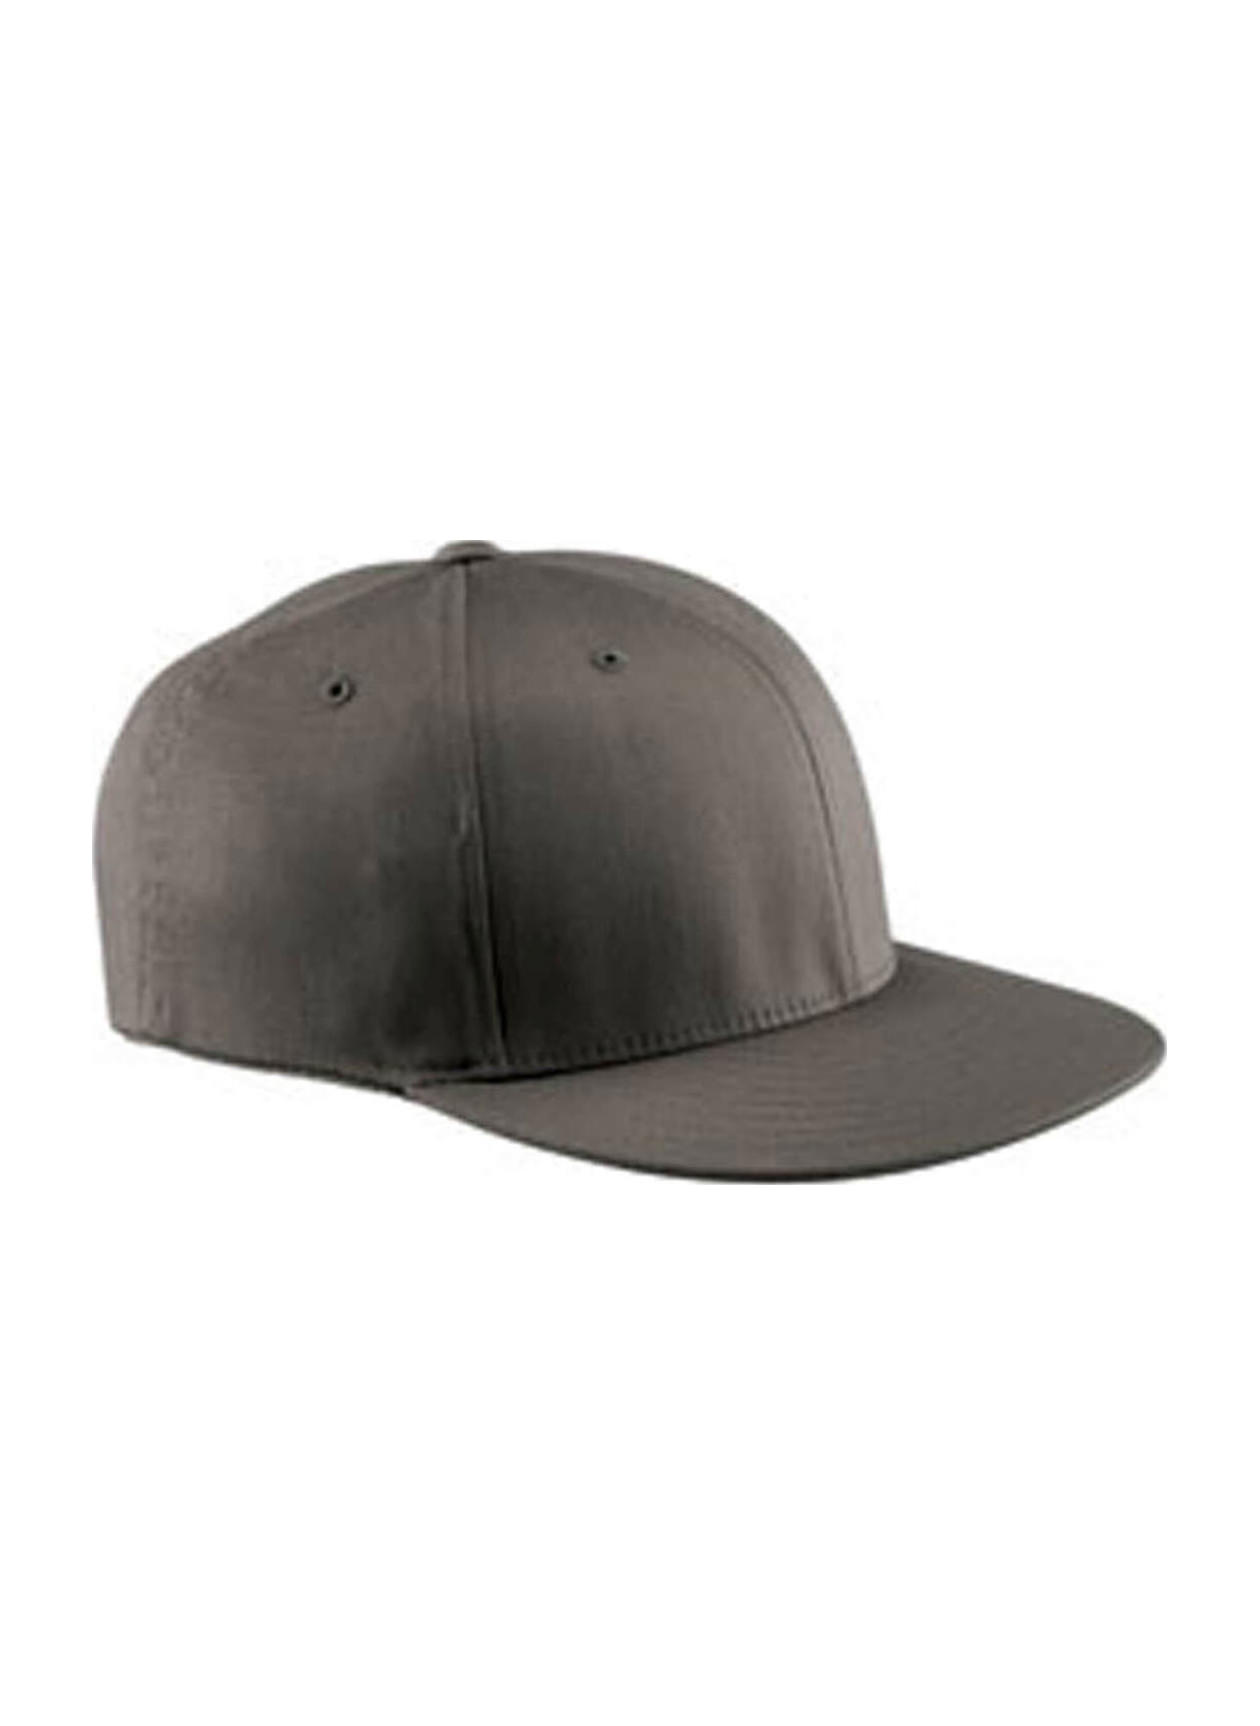 Flexfit Dark Grey Wooly Twill Pro Baseball On-Field Shape Hat with Flat Bill